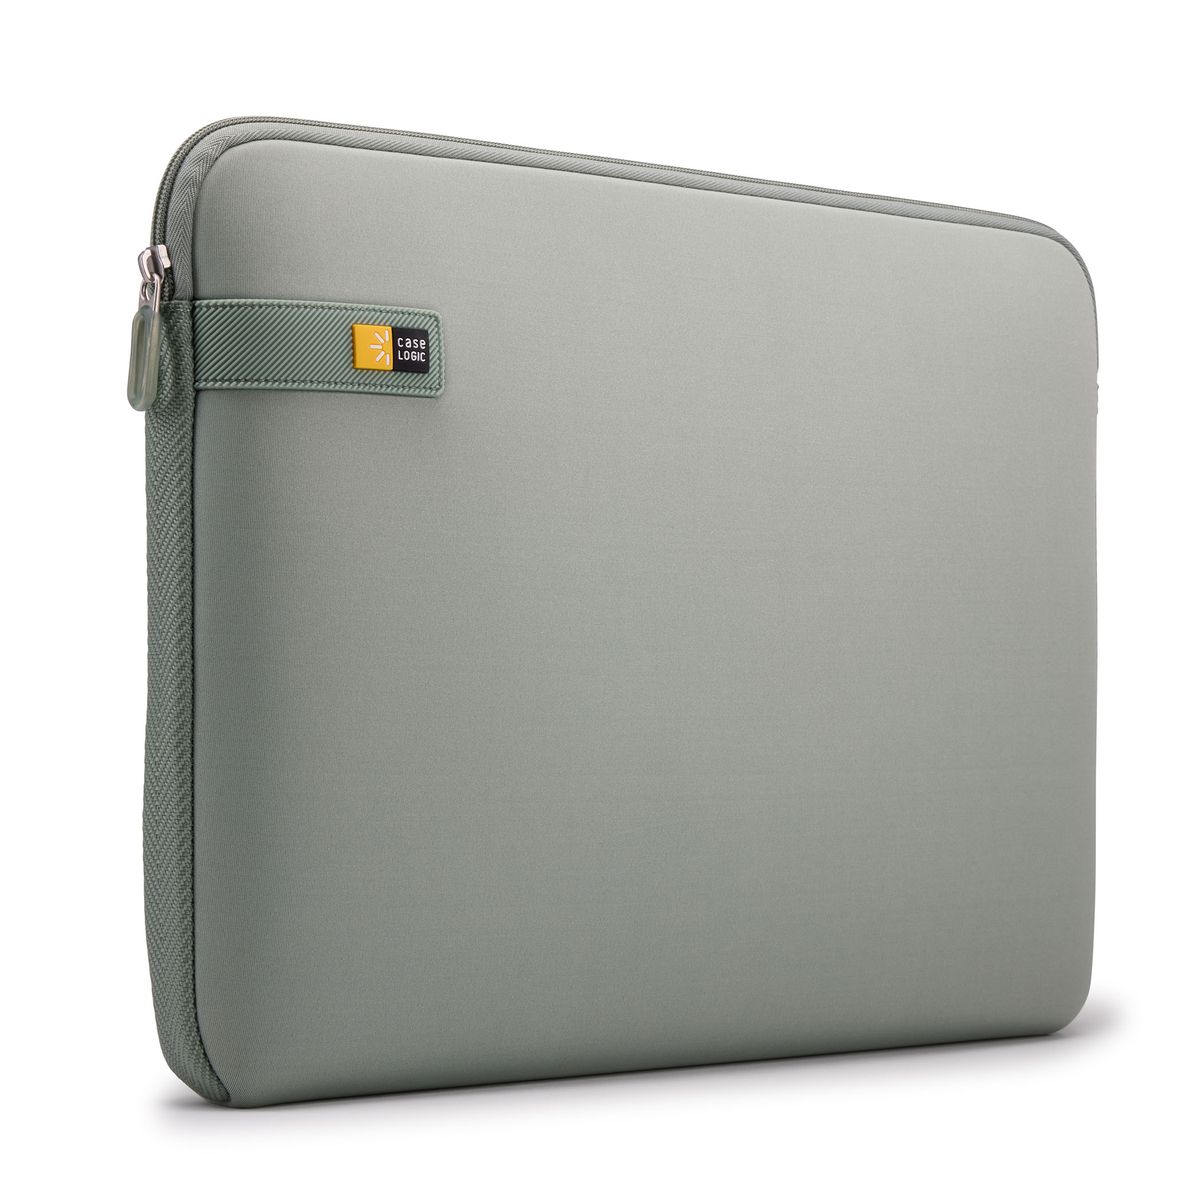 Case Logic 15-16" Laptop Sleeve Ramble Green - Feature